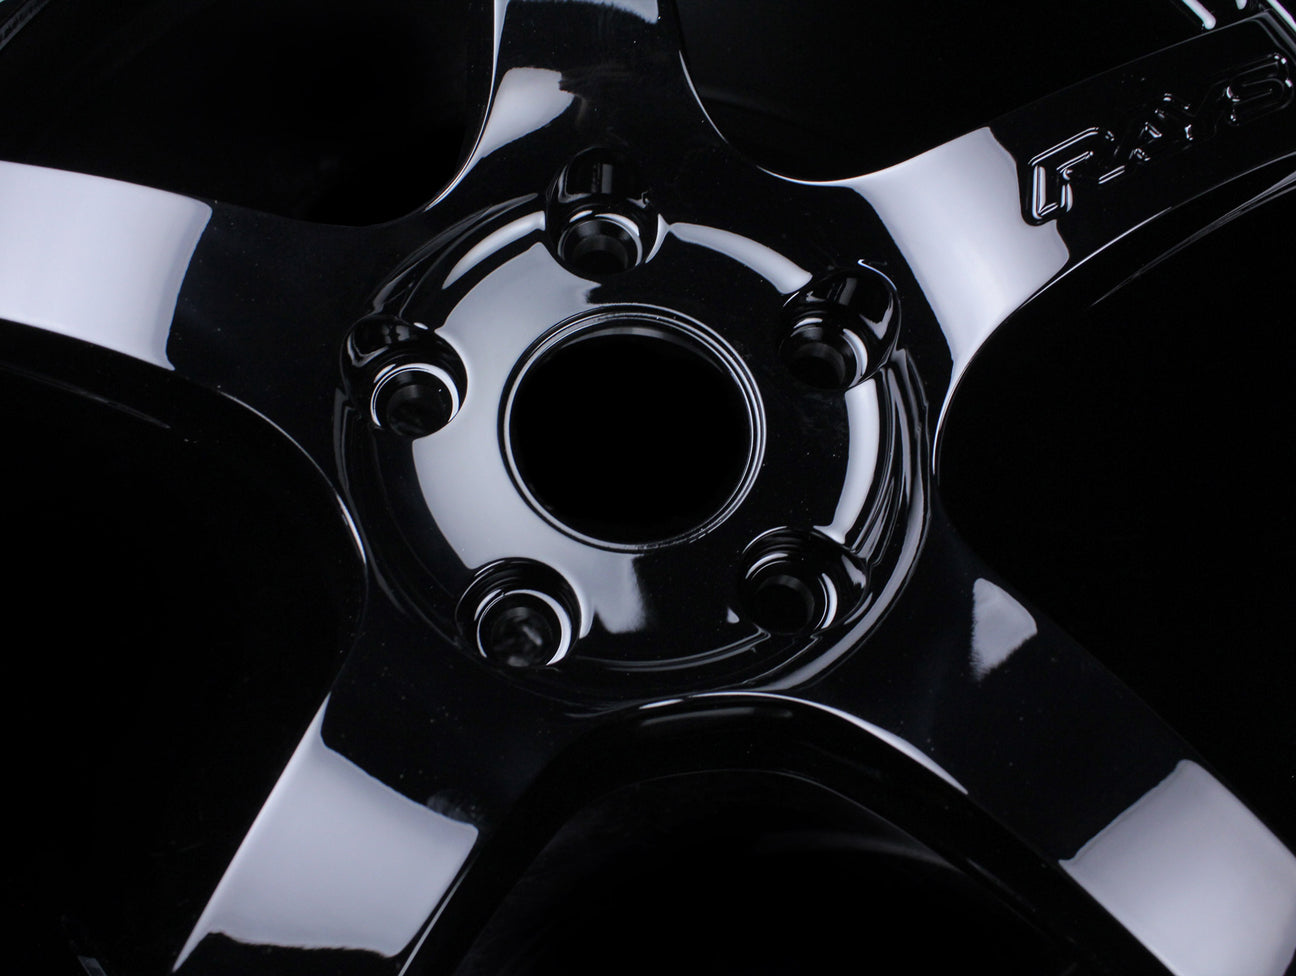 Rays Gram Lights 57CR Wheels - Gloss Black 18x9.5 / 5x120 / +38